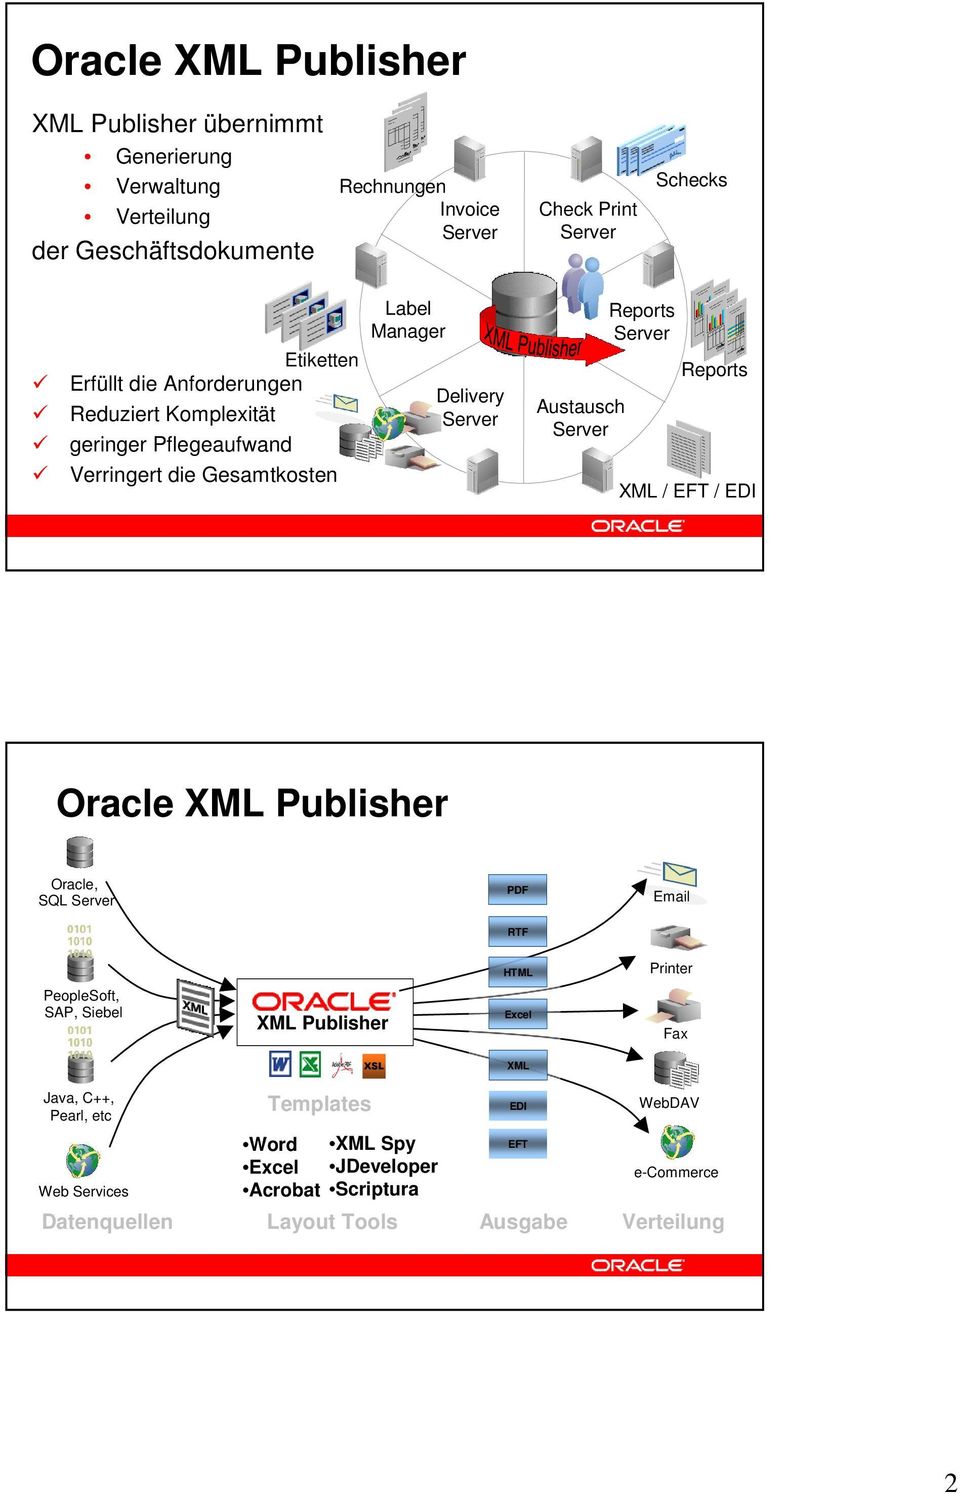 Reports XML / EFT / EDI Oracle Oracle, SQL PDF Email RTF HTML Printer PeopleSoft, SAP, Siebel Excel Fax XSL XML Java, C++, Pearl, etc